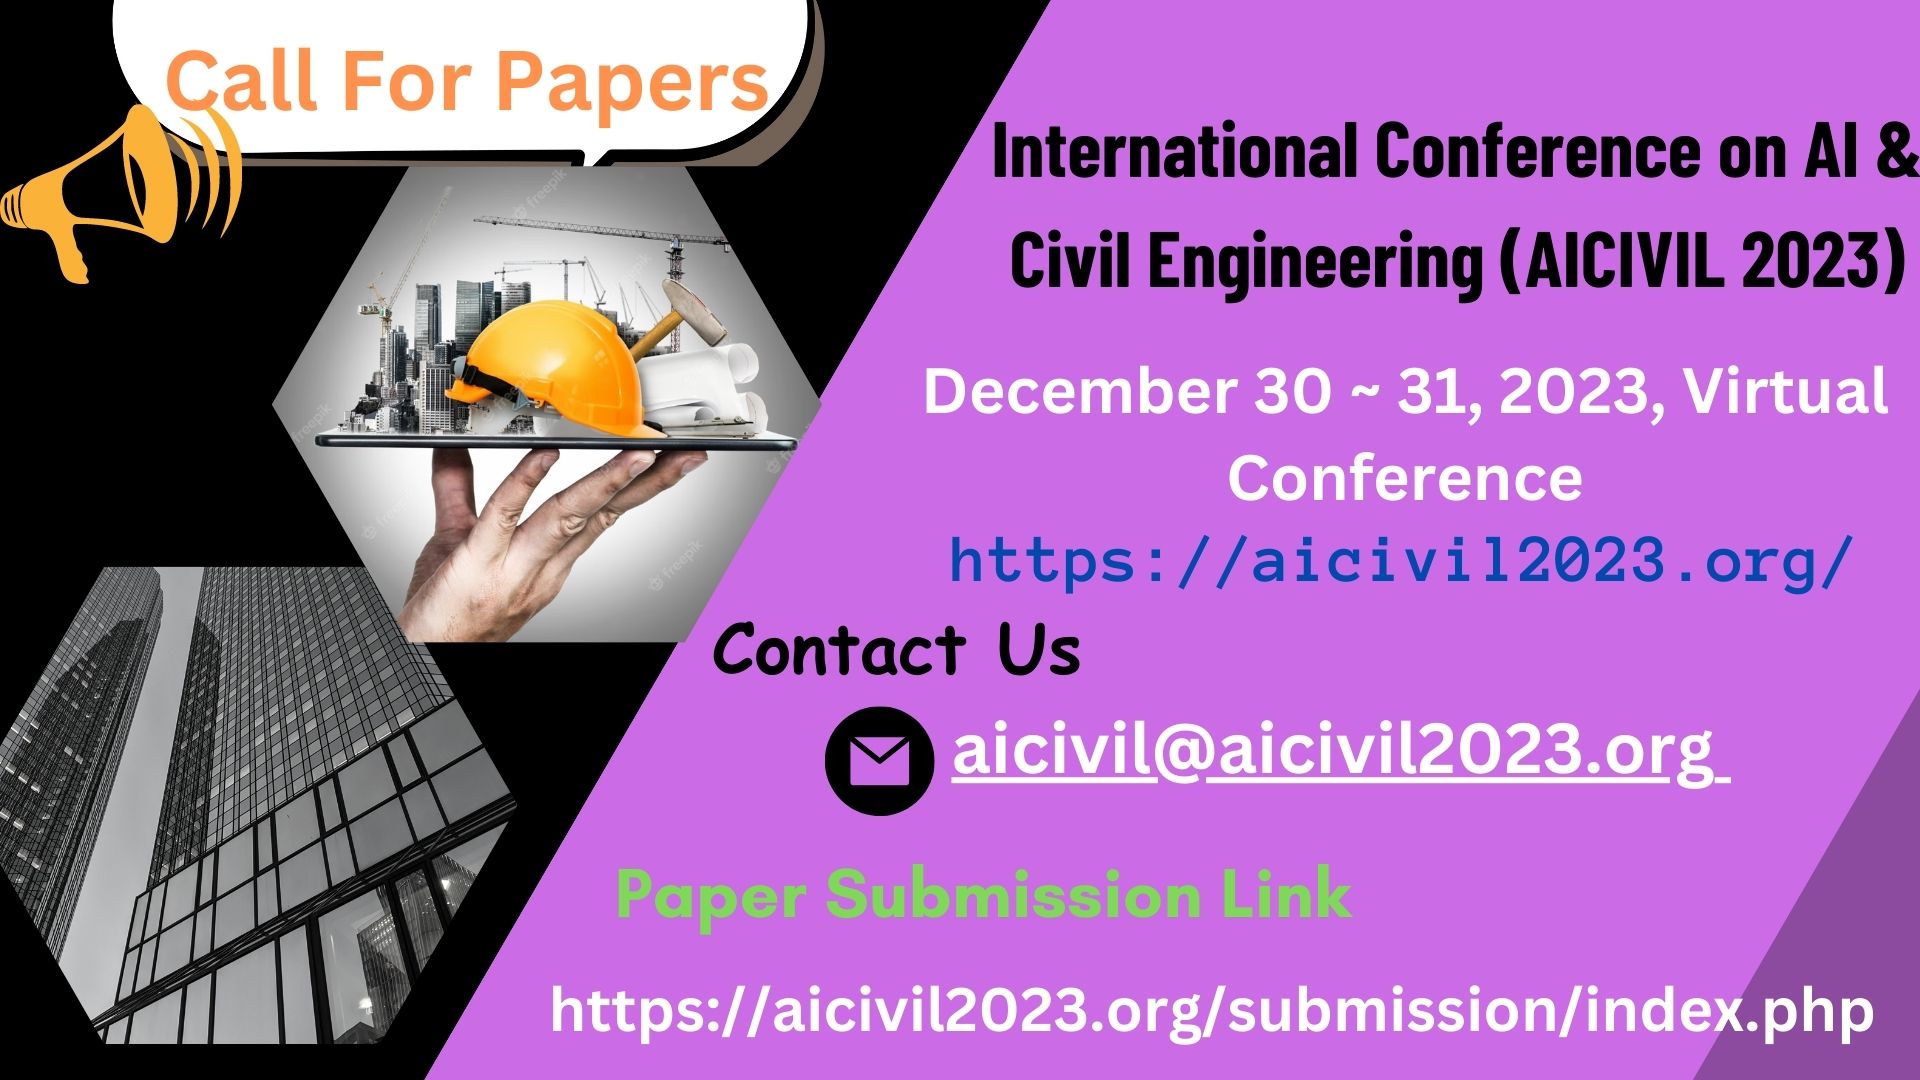 International Conference on AI & Civil Engineering (AICIVIL 2023)